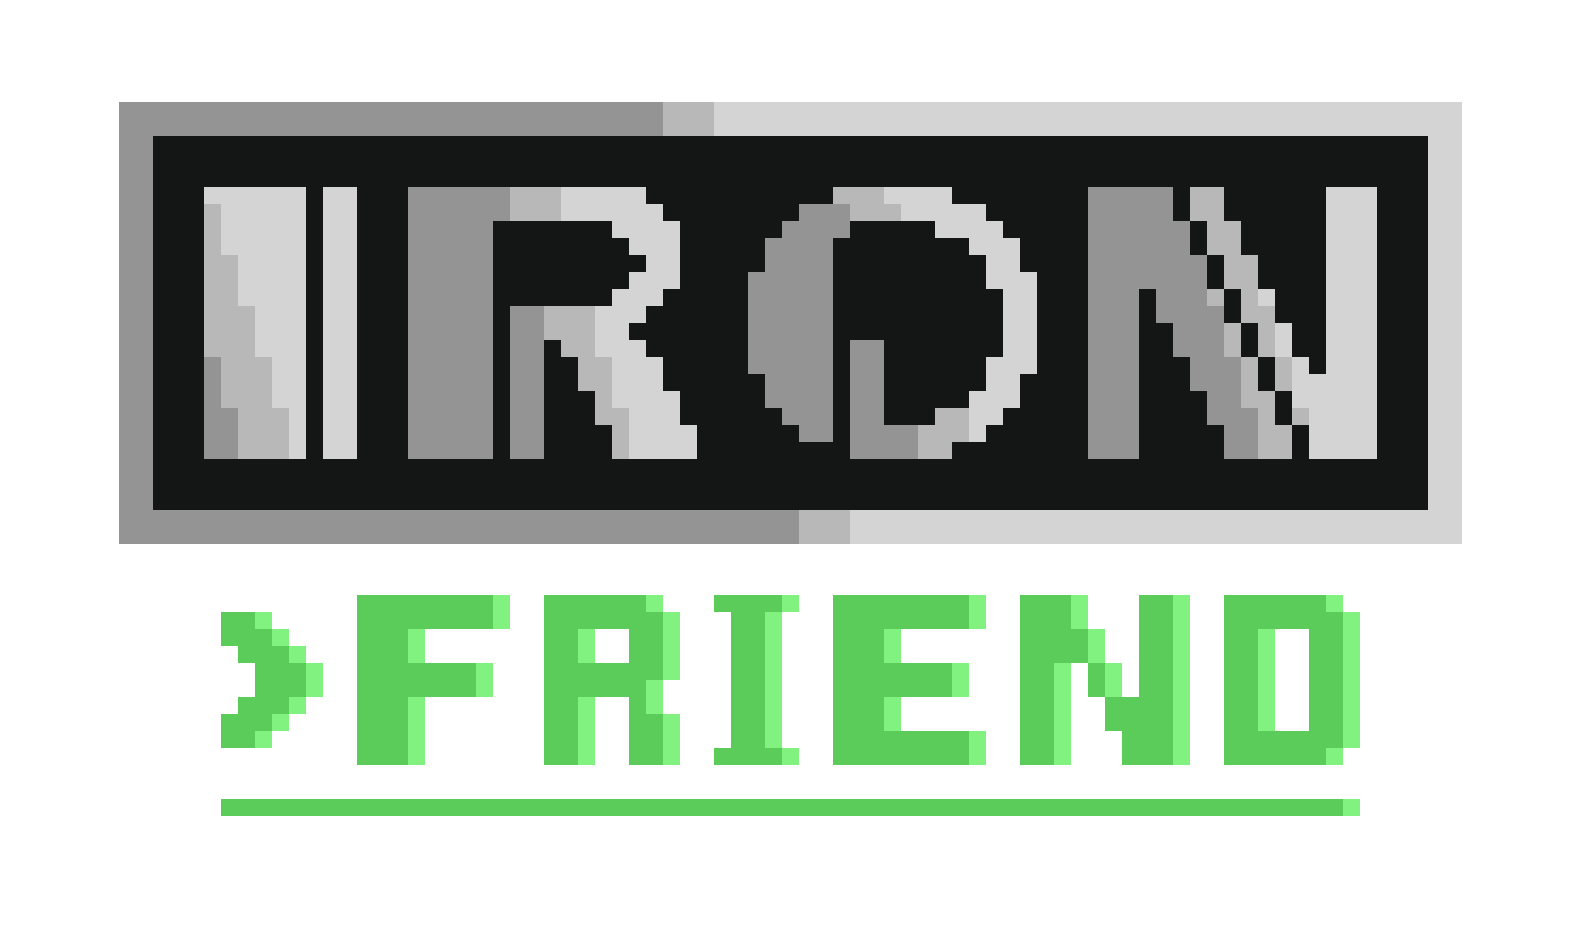 Iron friend